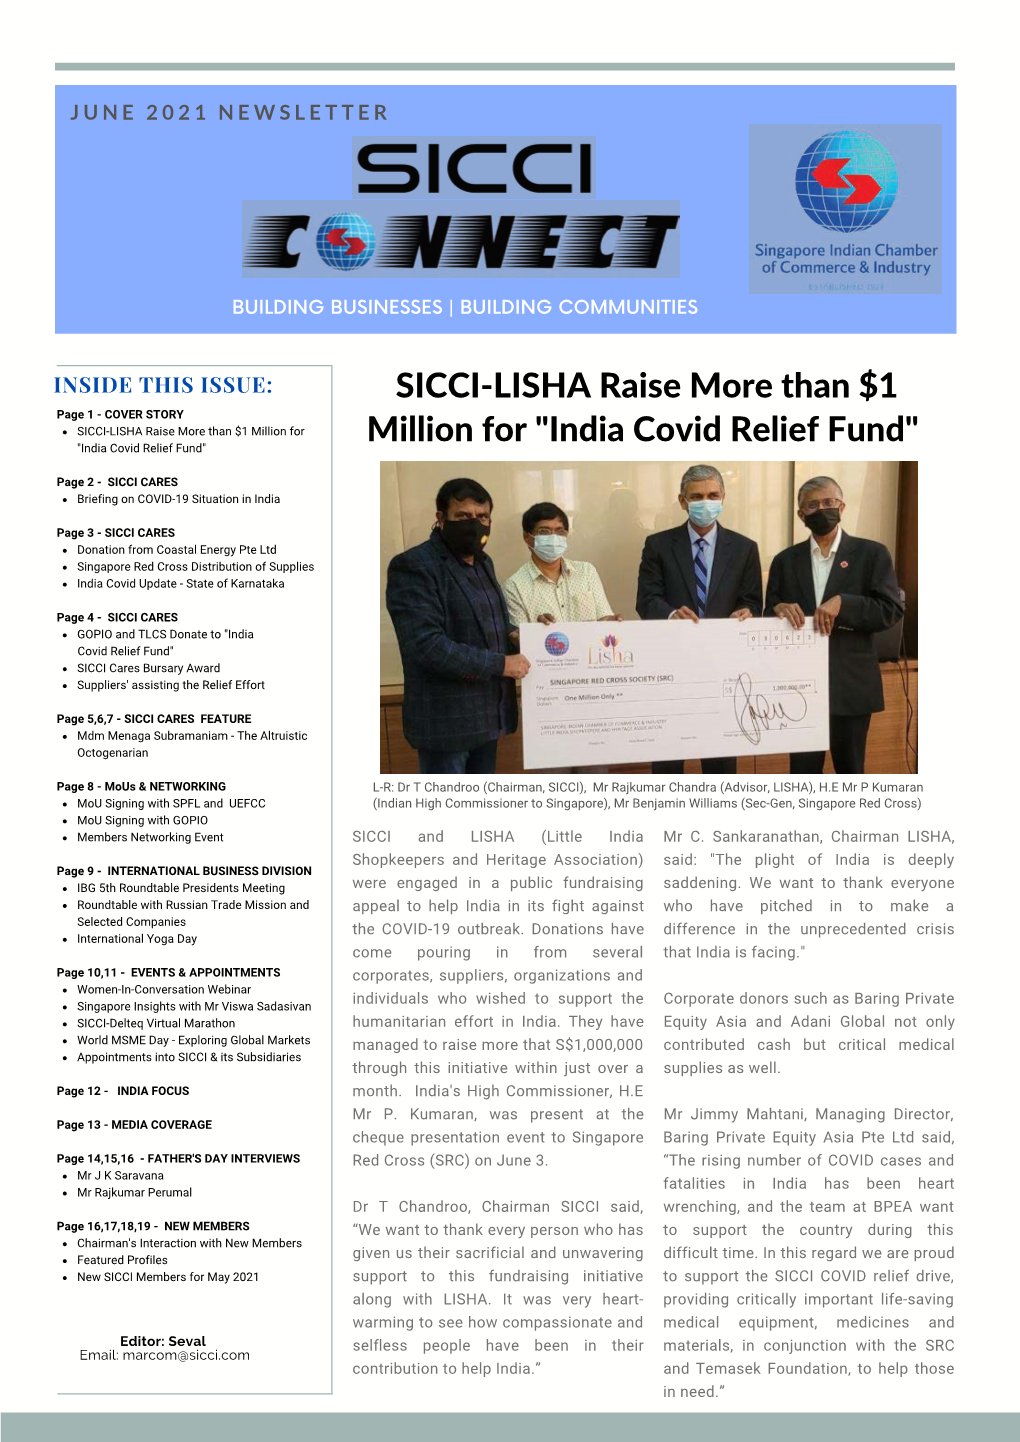 SICCI-LISHA Raise More Than $1 Million for "India Covid Relief Fund"